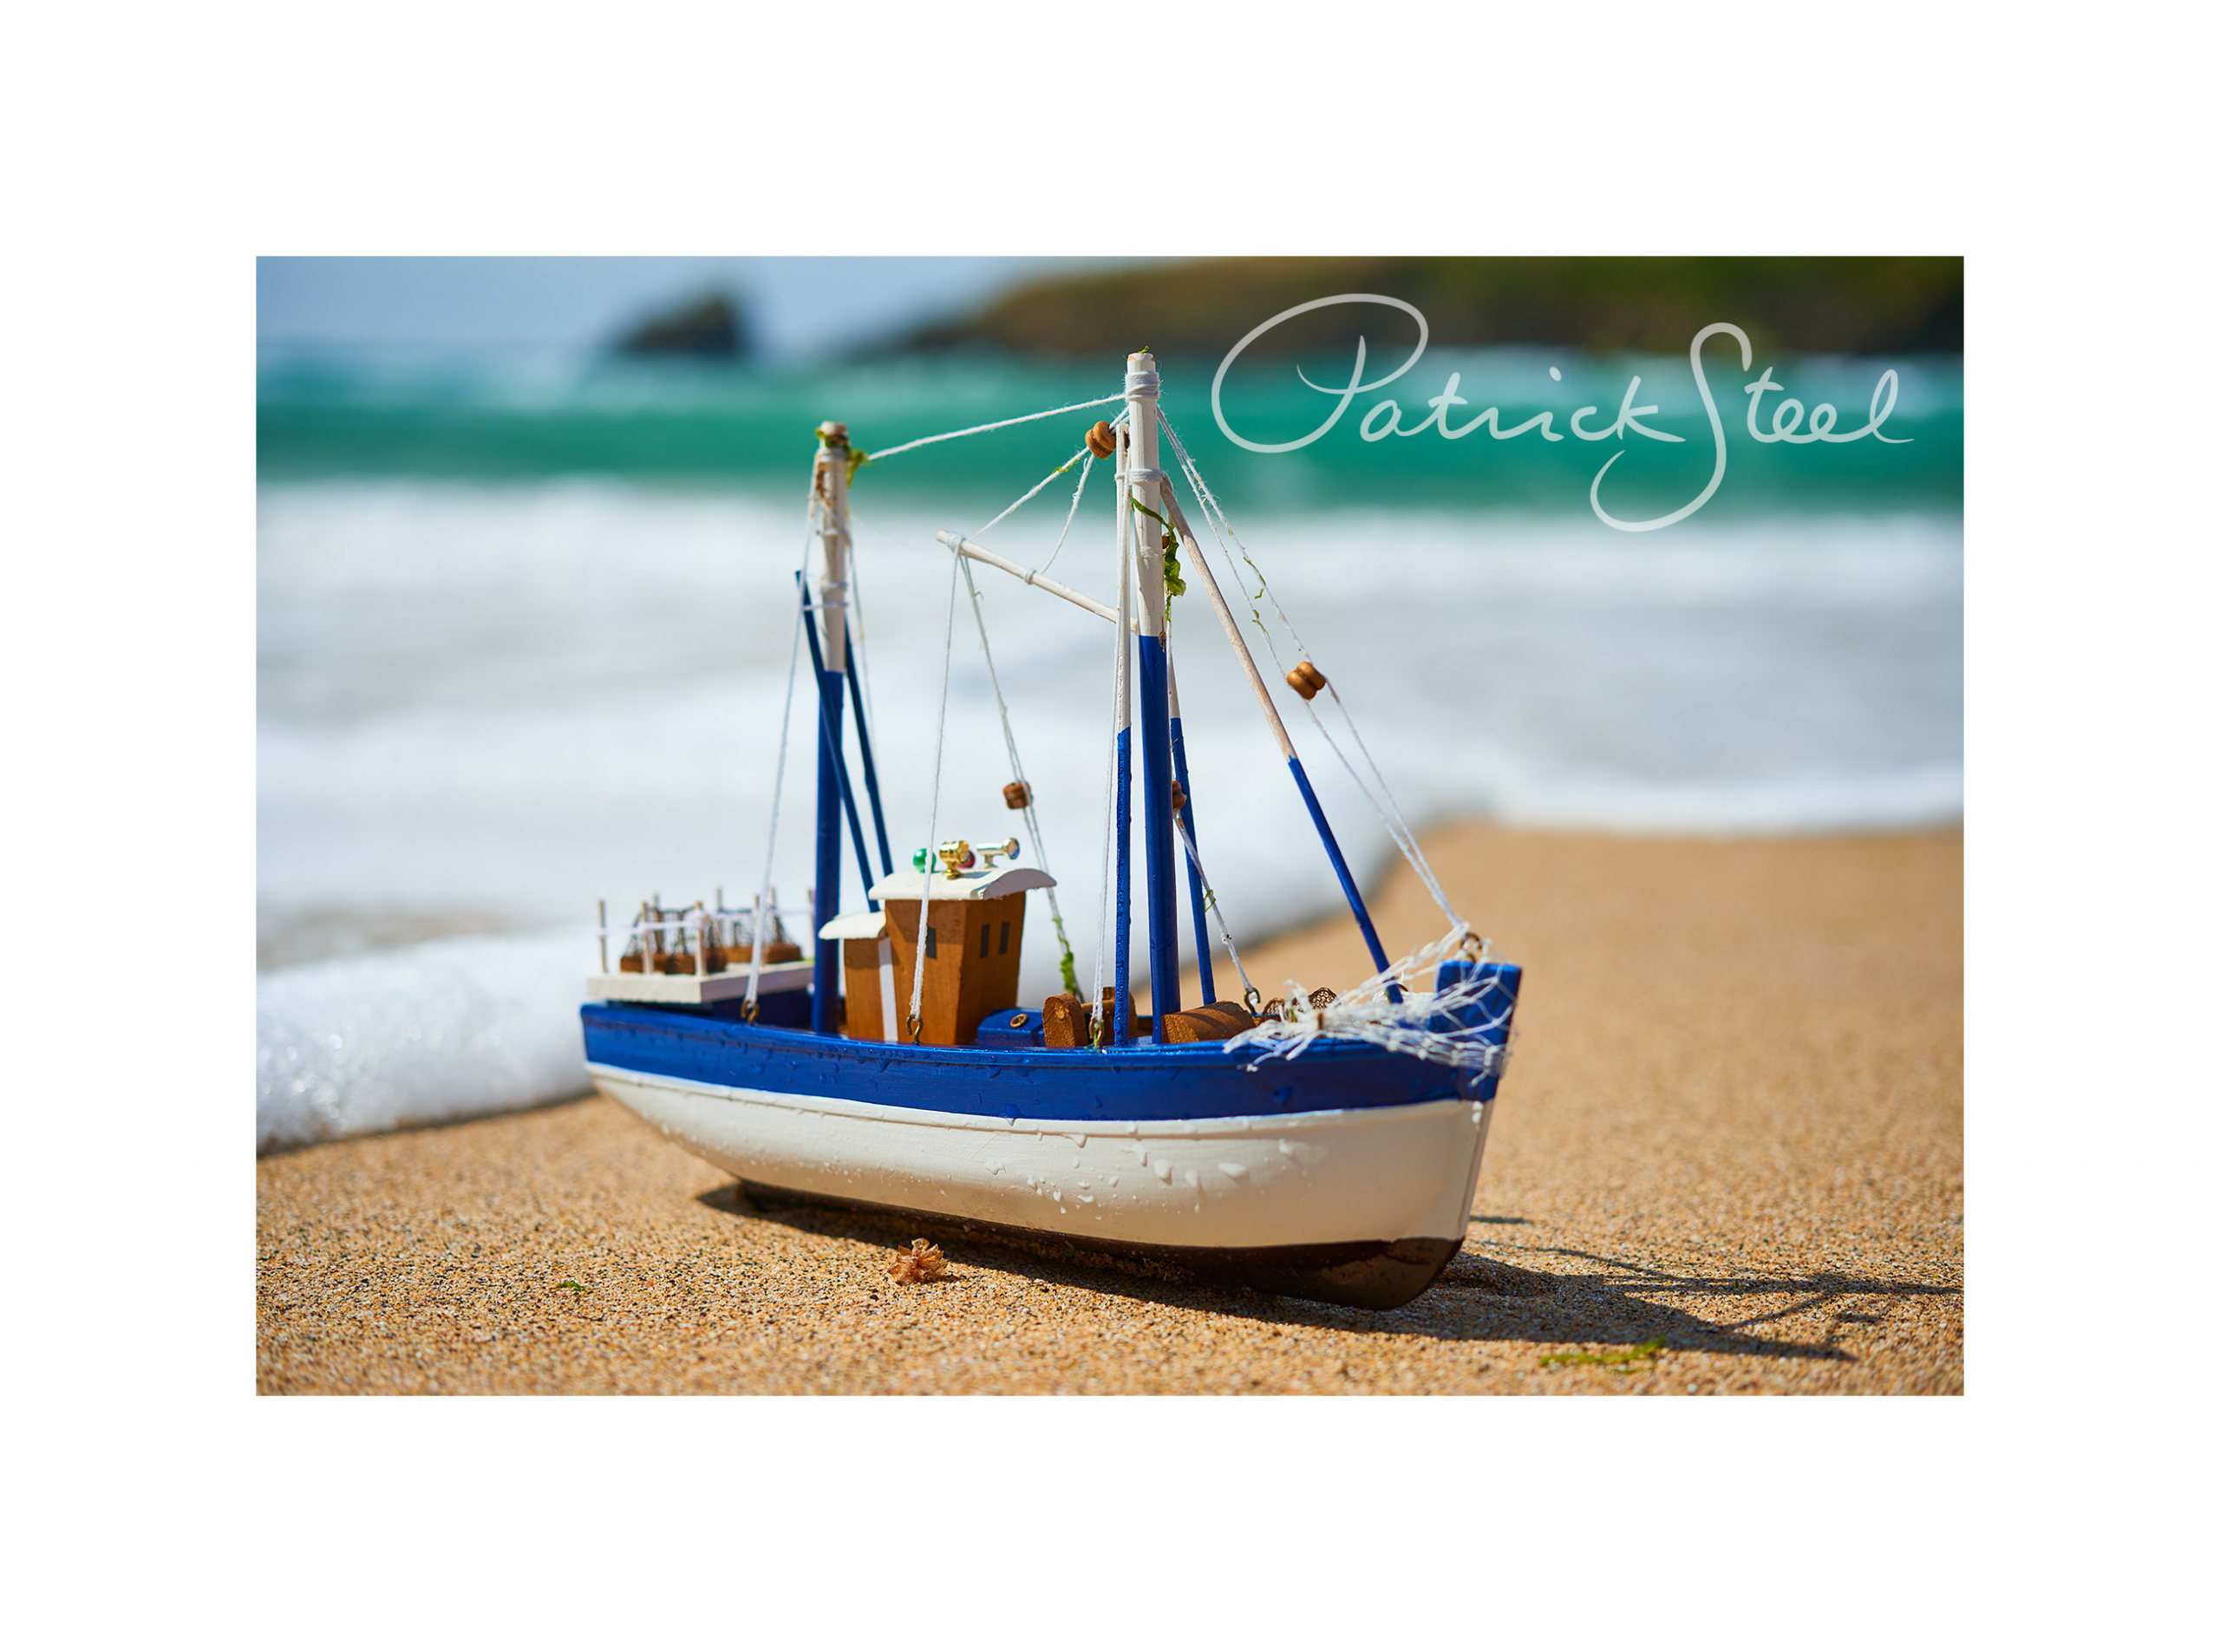 miniature fishing trawler on trevone beach cornwall by photographer patrick steel